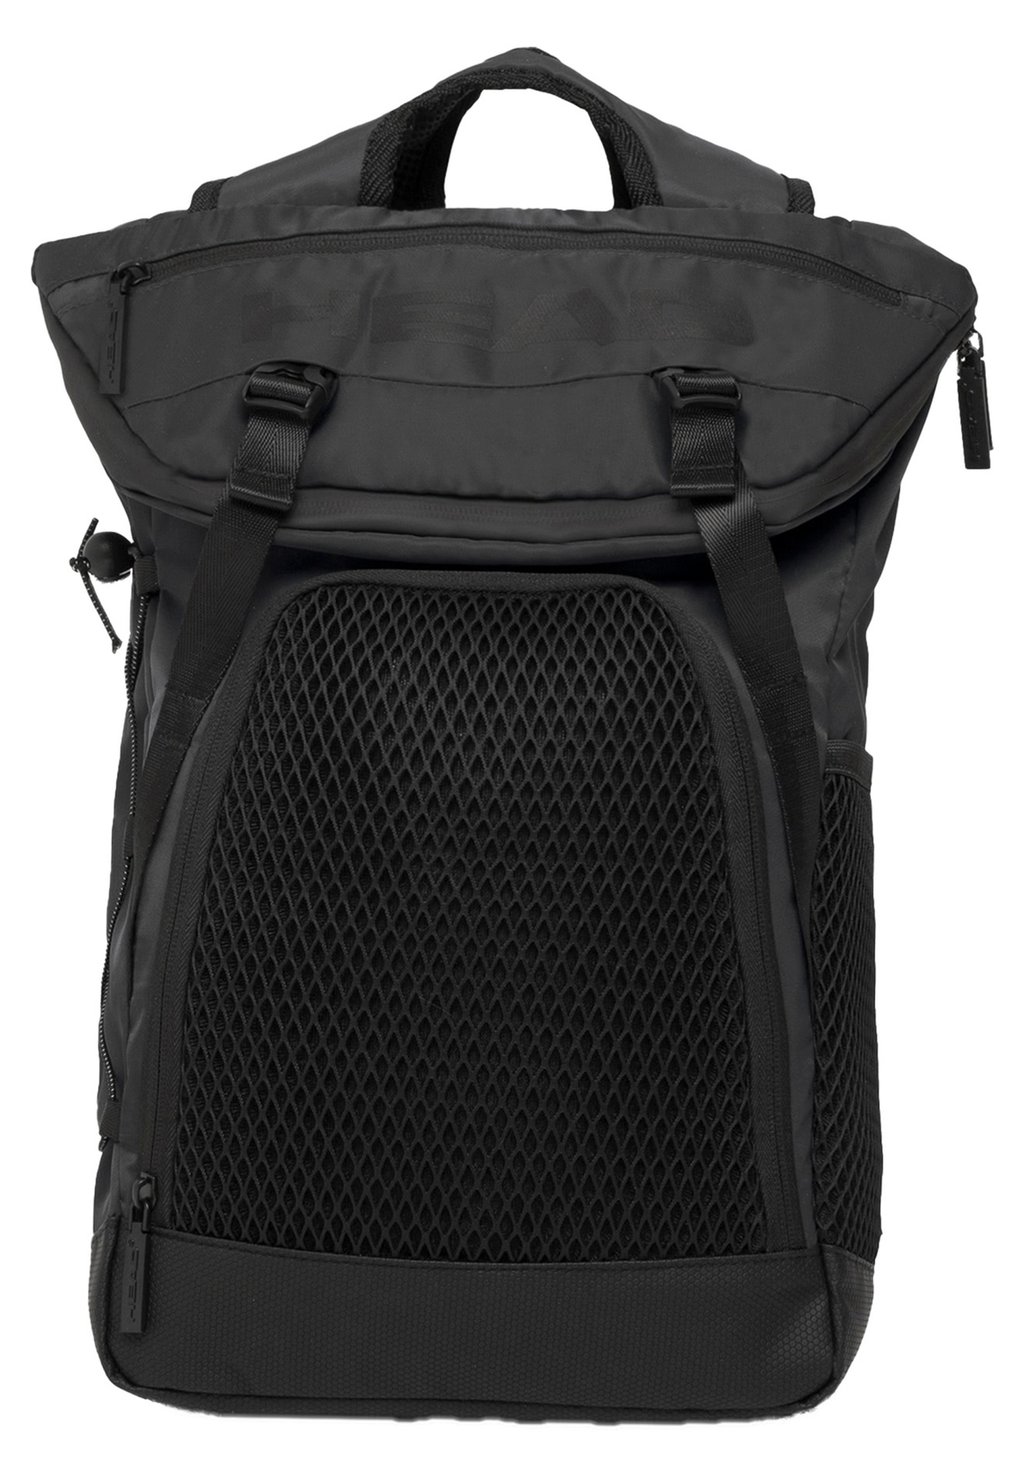 Рюкзак NET KOLLEKTION Head, цвет schwarz рюкзак для путешествий head net vertical темно синий